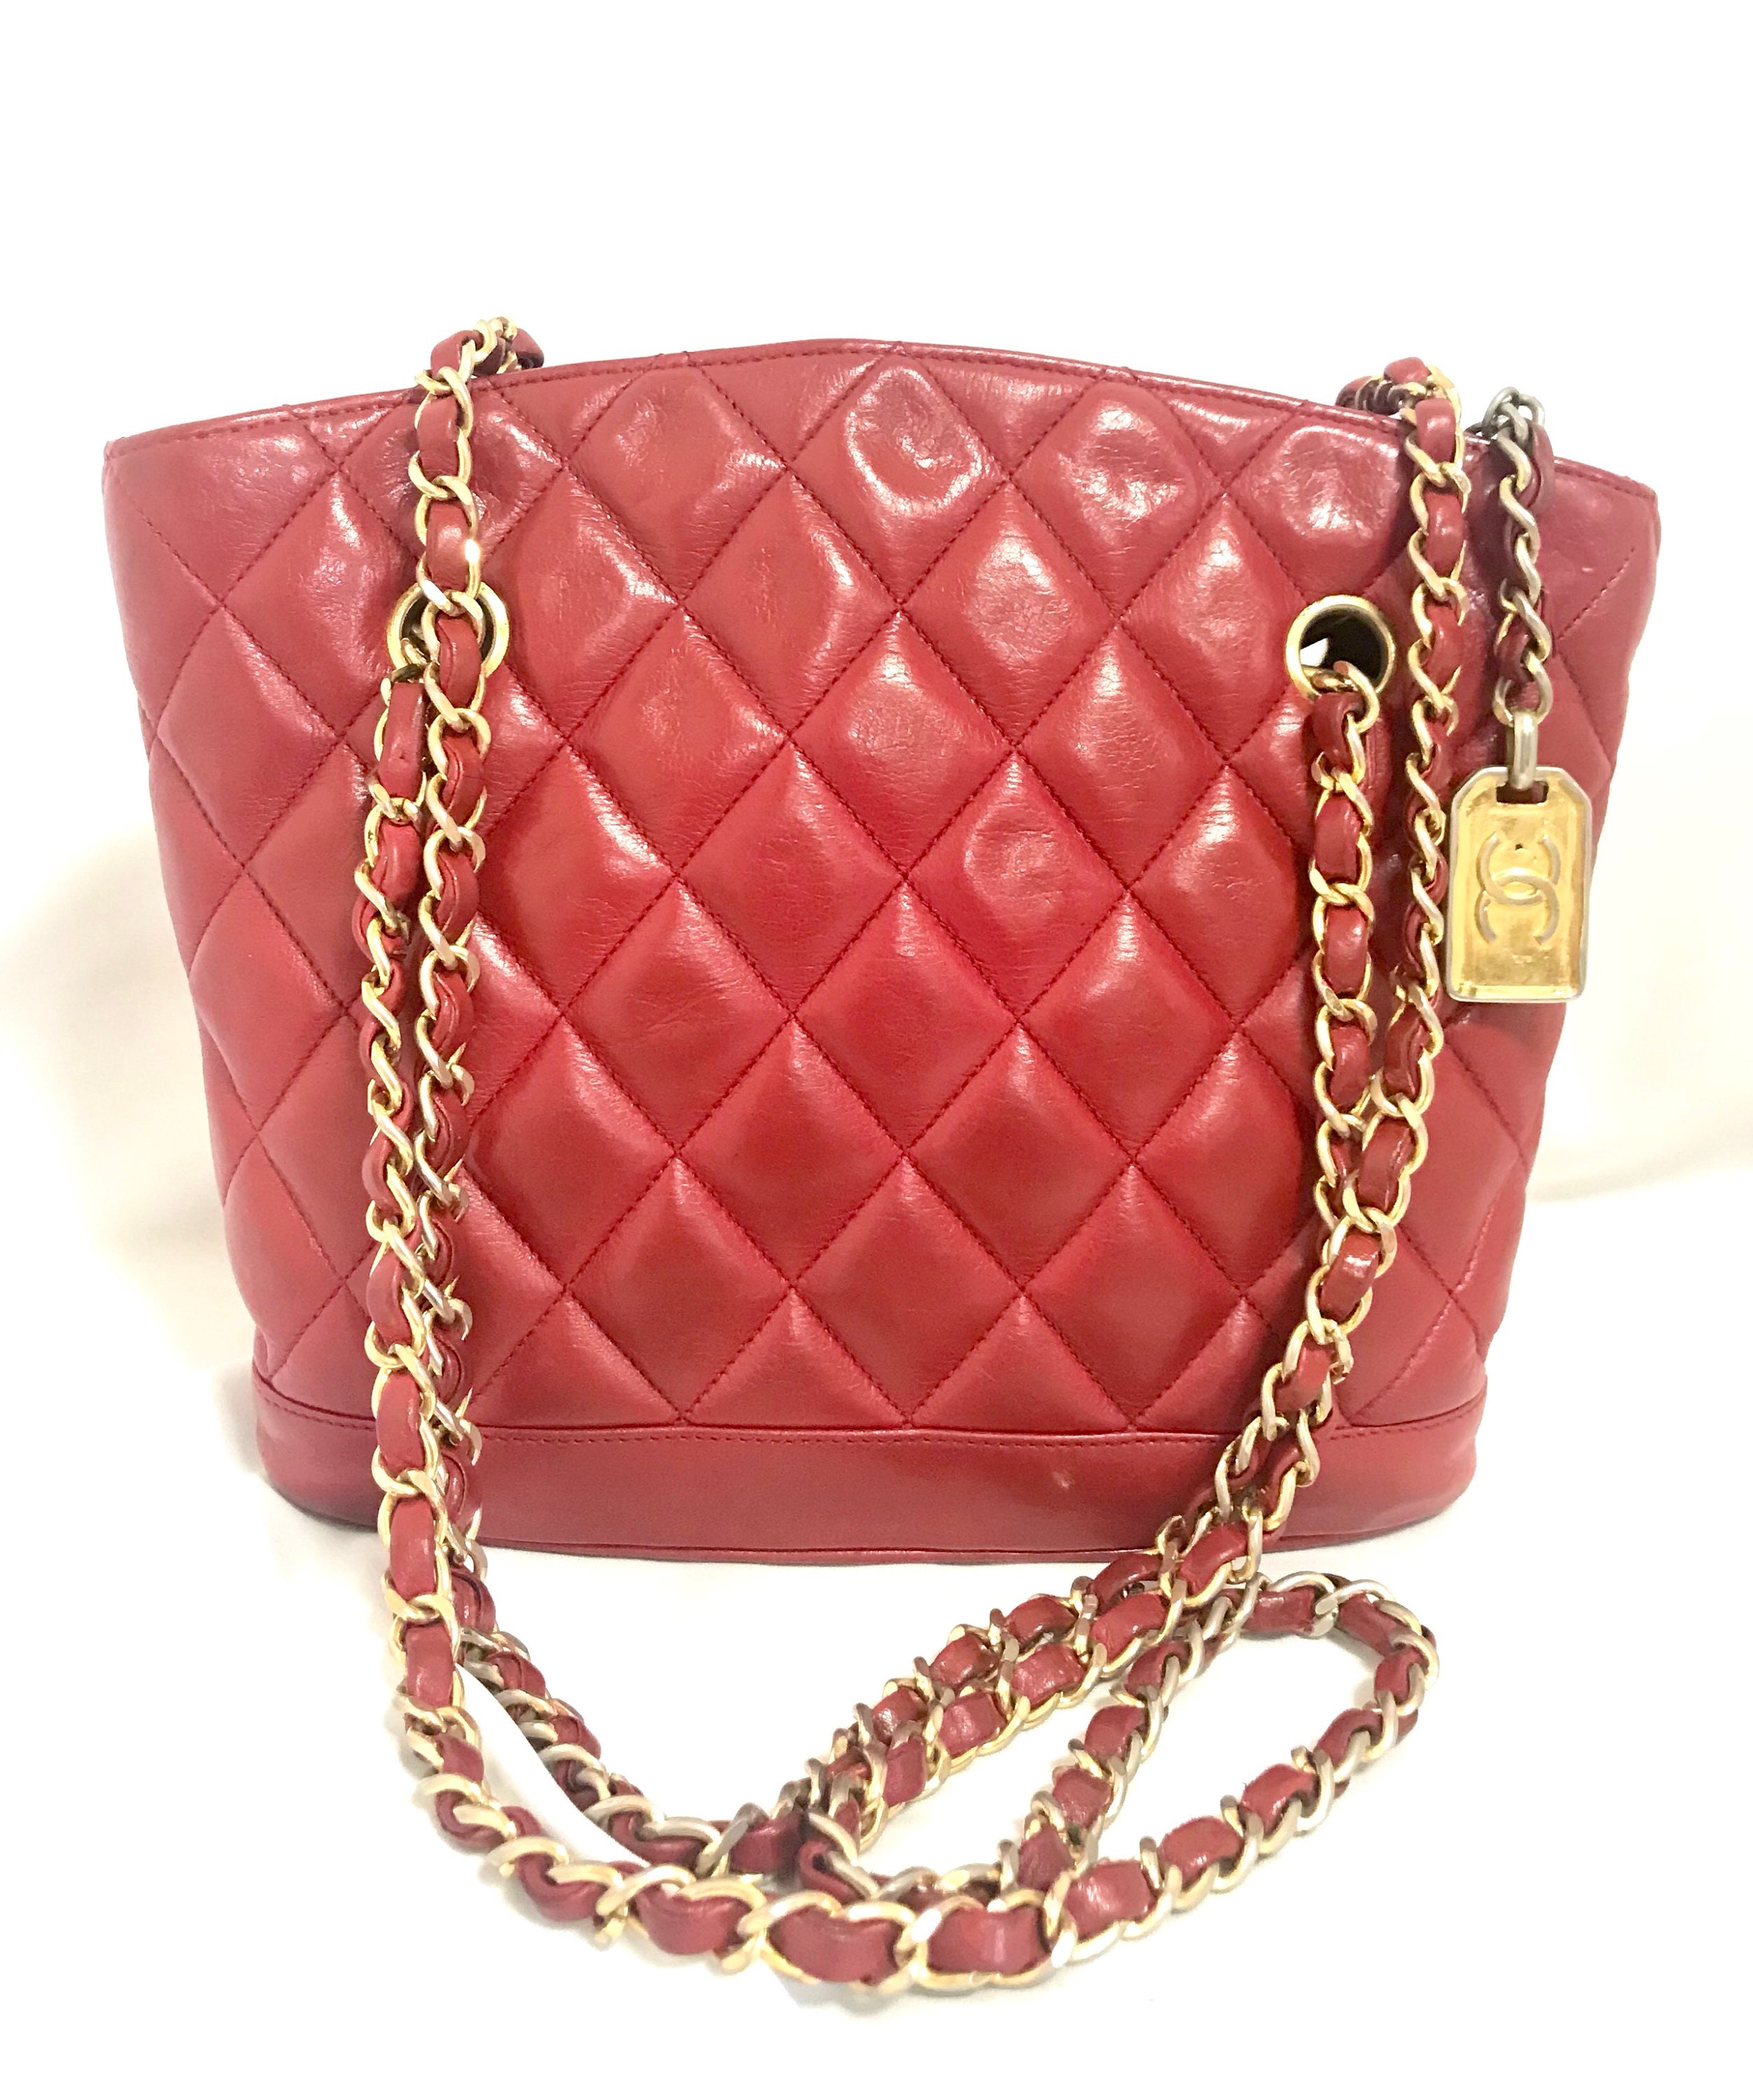 Vintage CHANEL red lamb leather shoulder bag with golden CC button motifs  at flap. Rare purse.